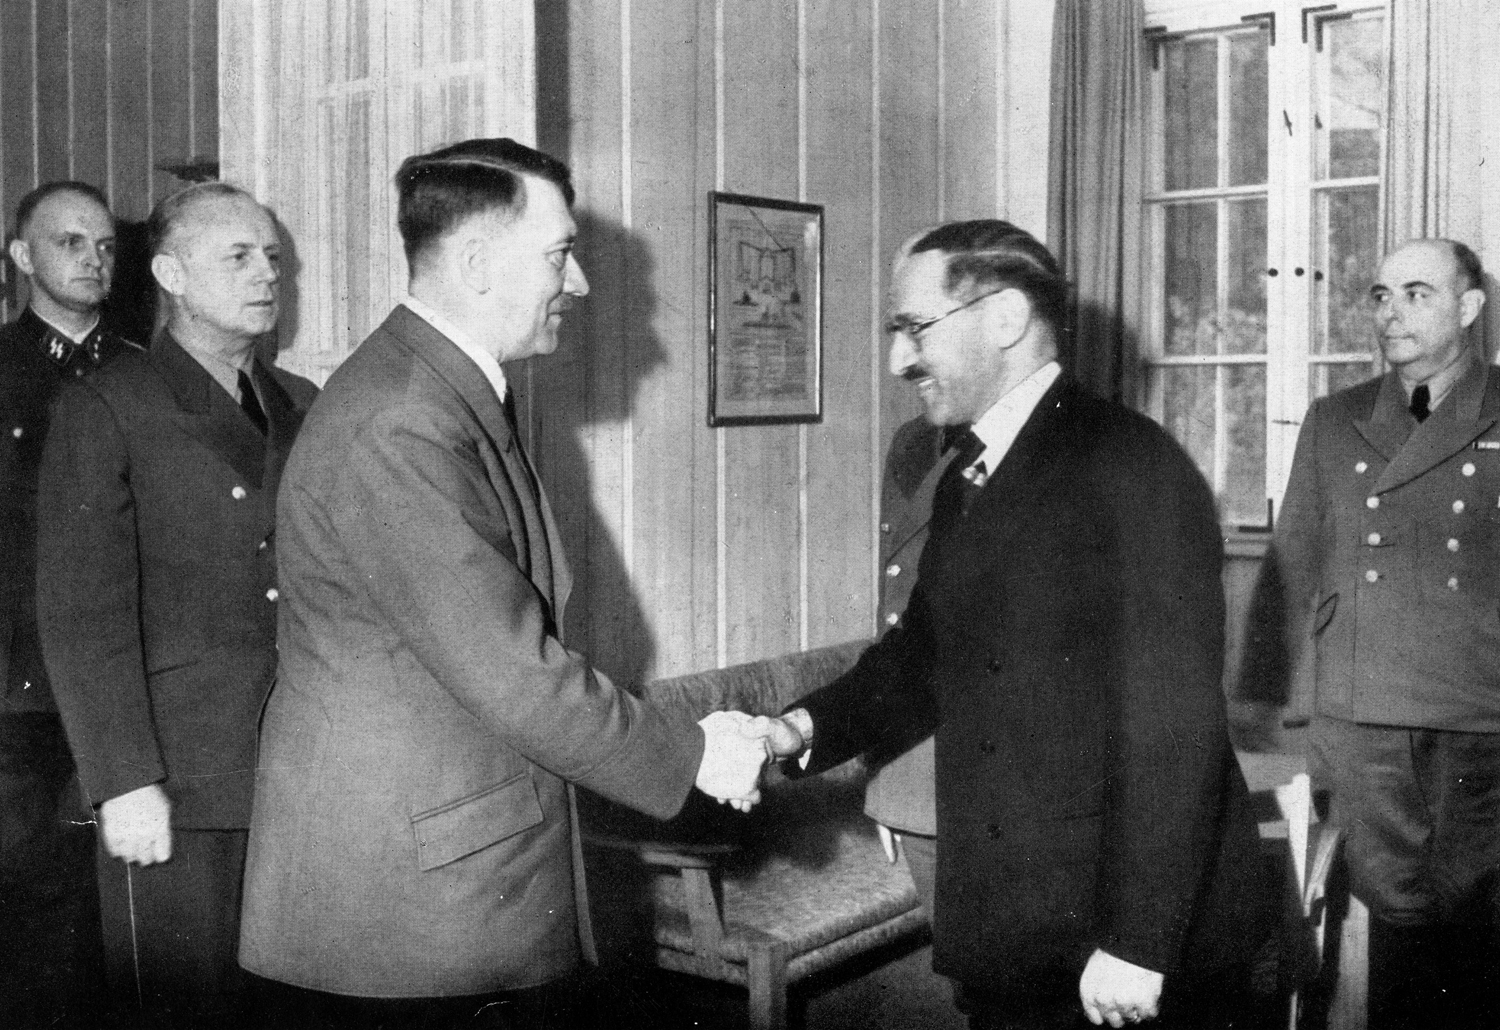 Adolf Hitler received Iraqui foreign affairs minister Rashid Ali al-Gaylani in Führerhauptquartier Werwolf 